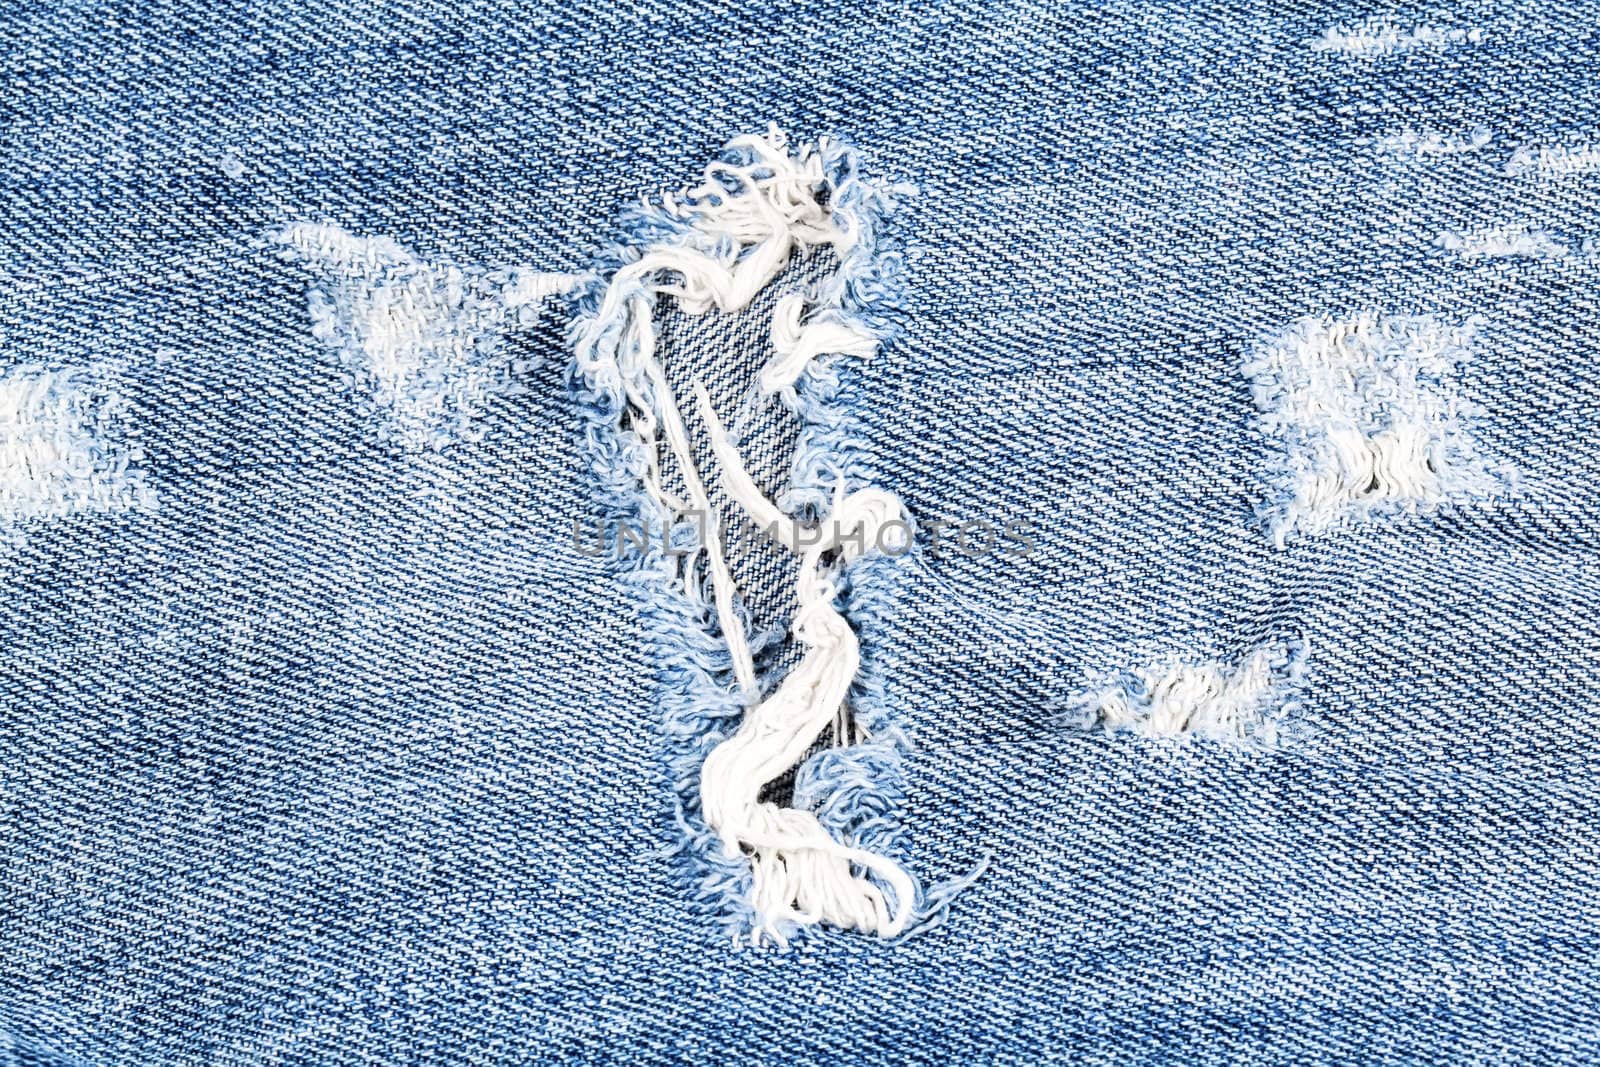 Blue denim jeans hole macro by RawGroup